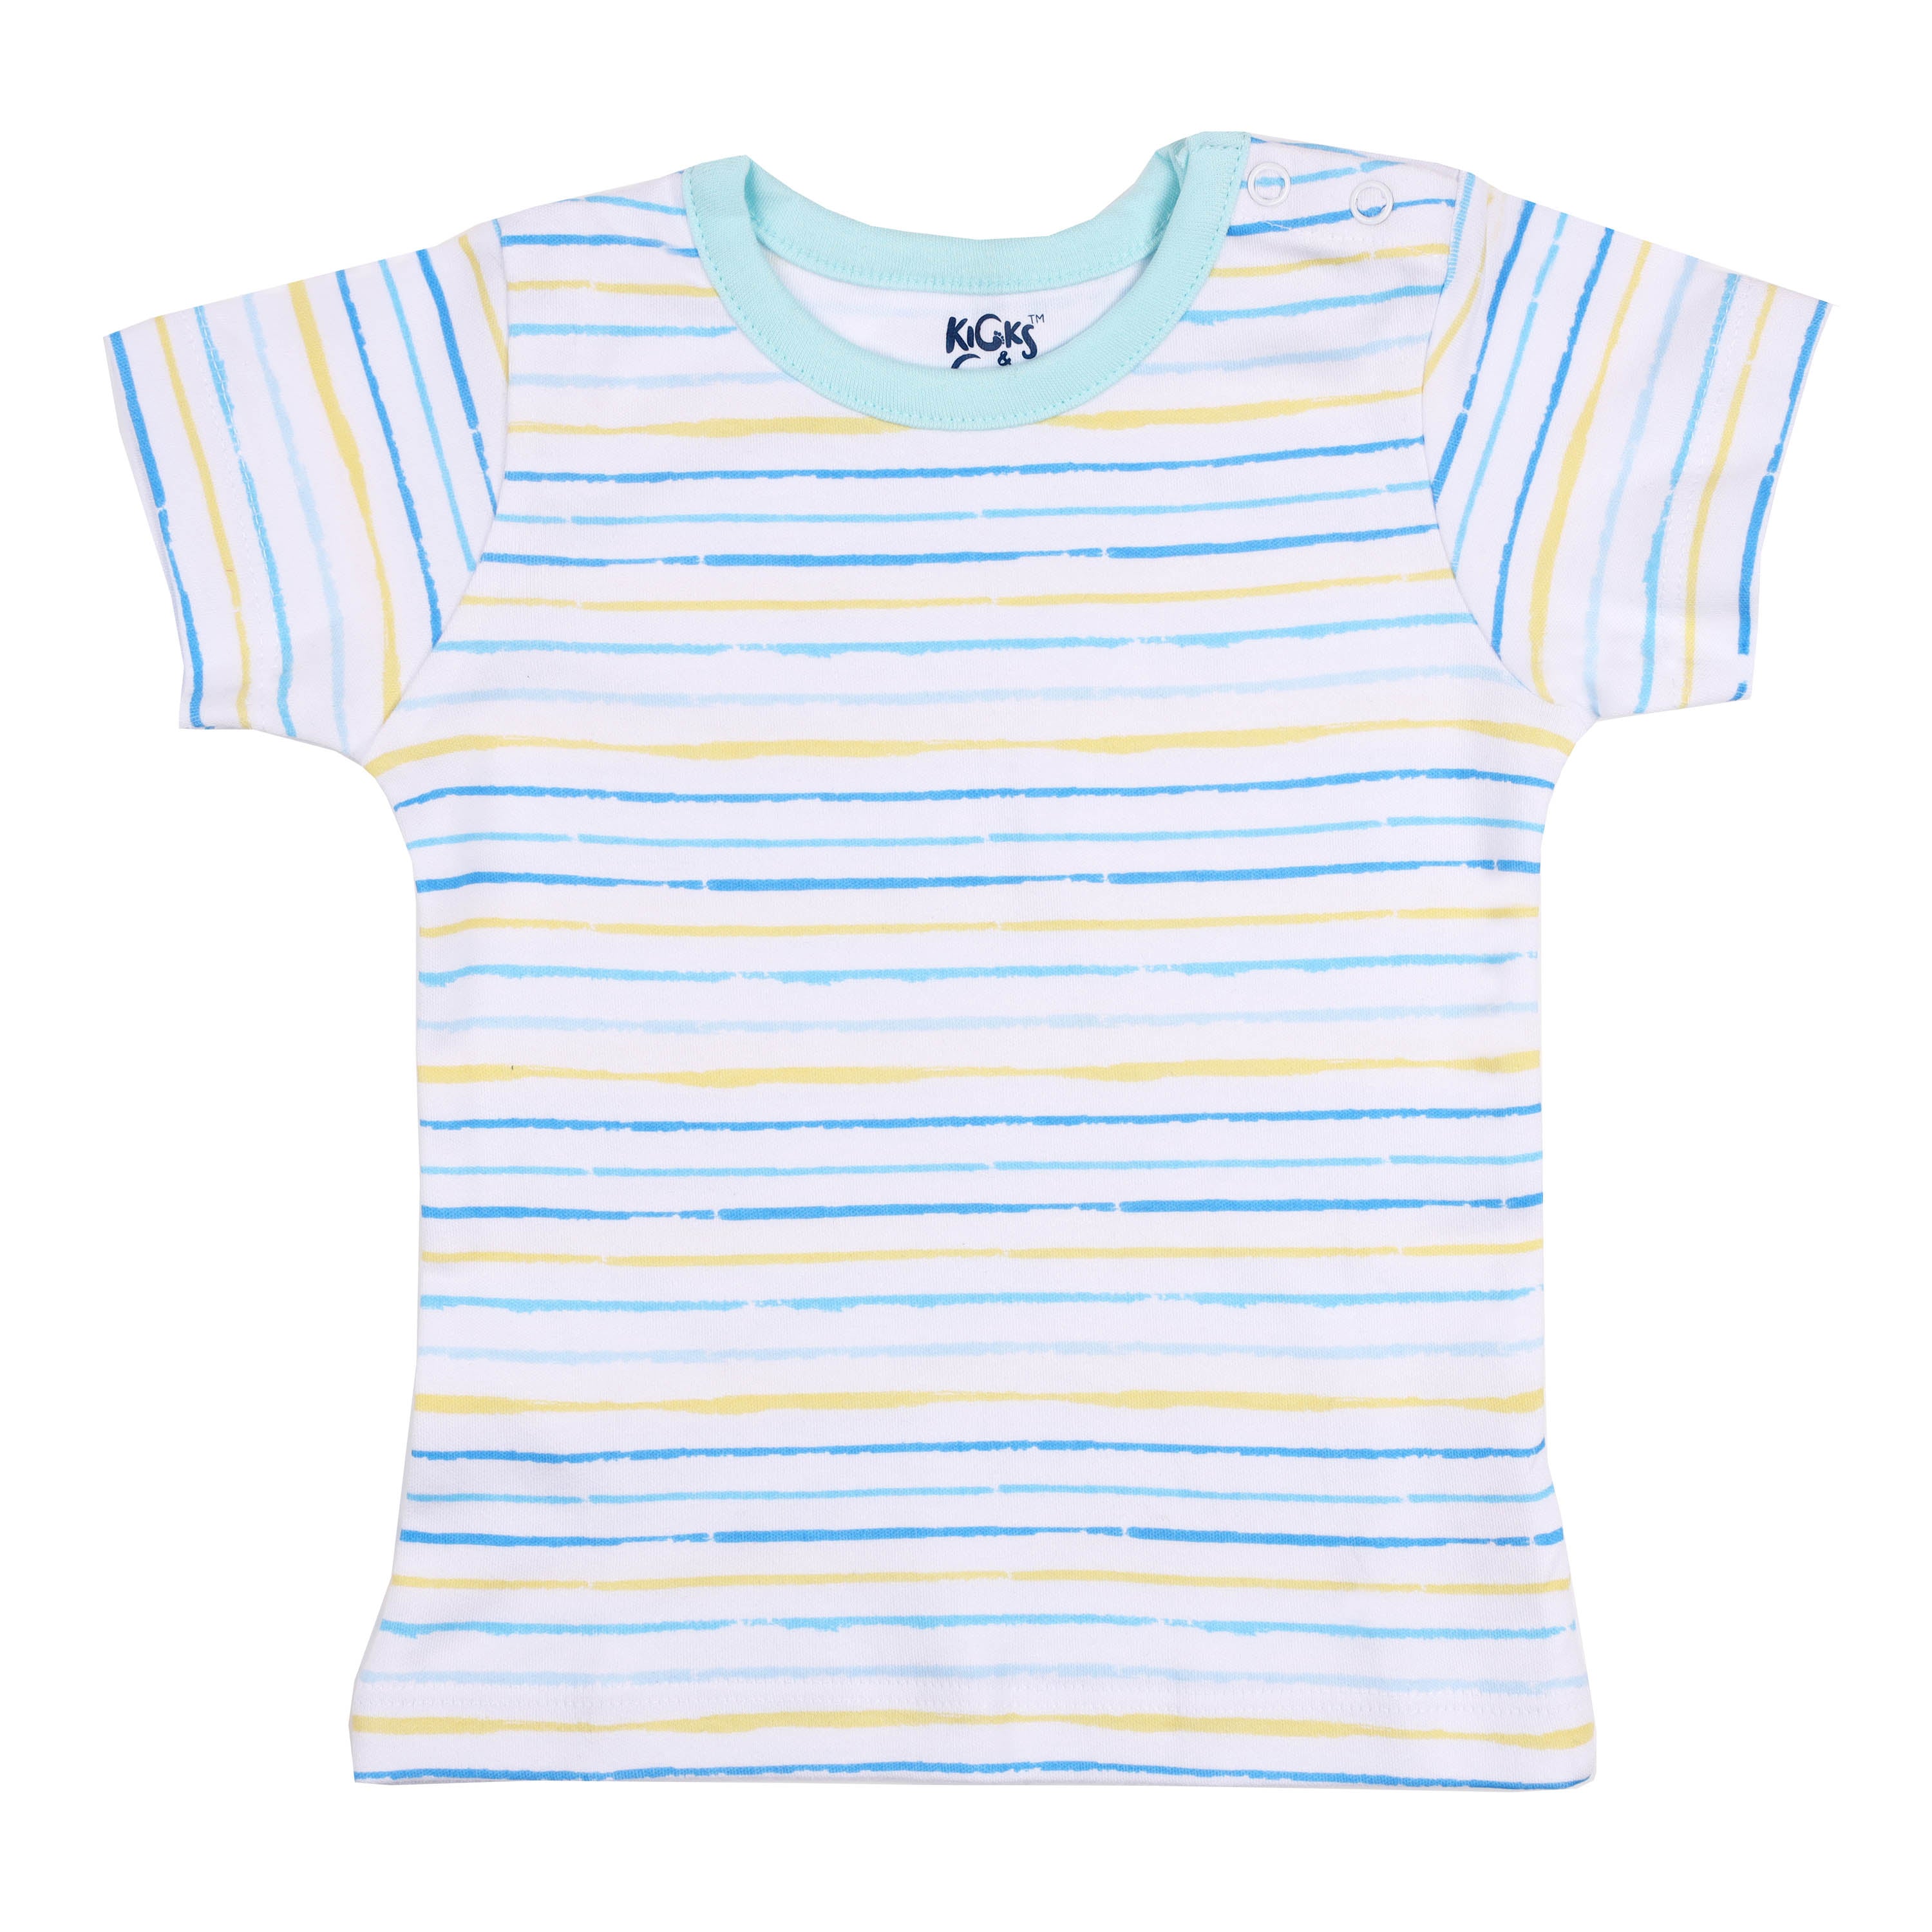 Kicks & Crawl - Submarine Seas Baby T-shirts - 3 Pack (NB, 0-24 Months)